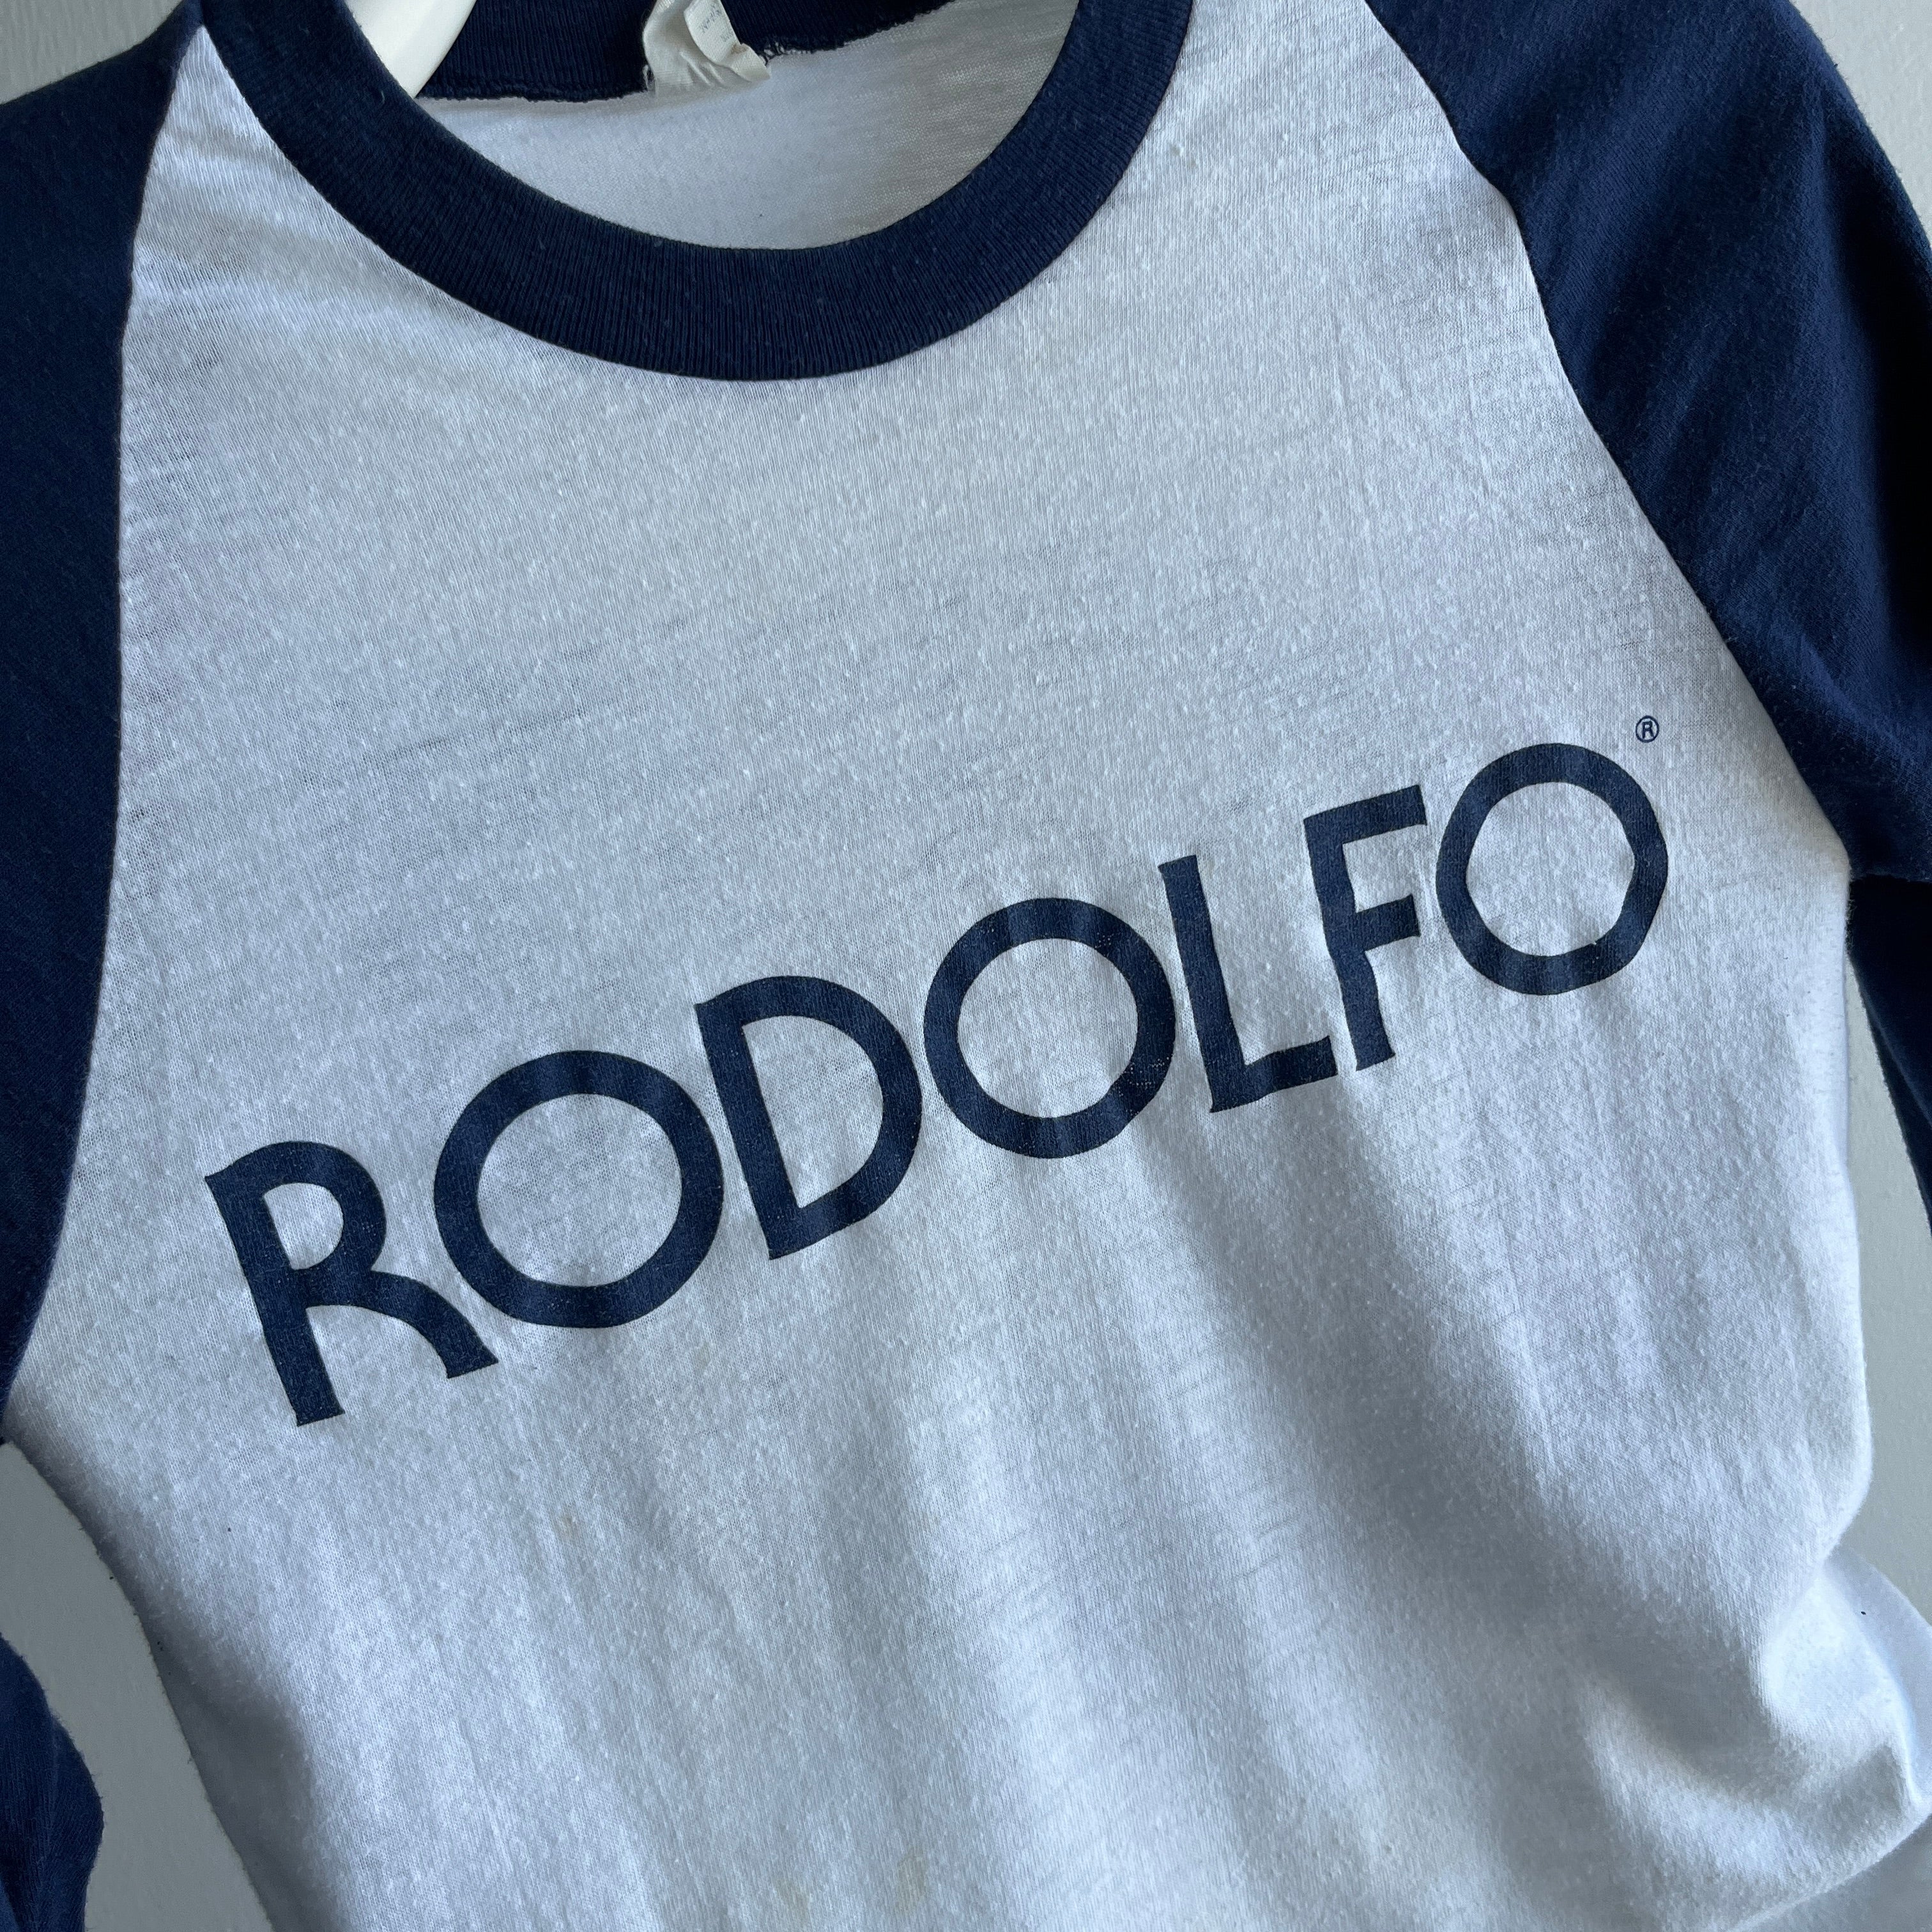 1970/80s Rodolfo - The Backside is a Conversation Starter/Ender- Baseball T-Shirt